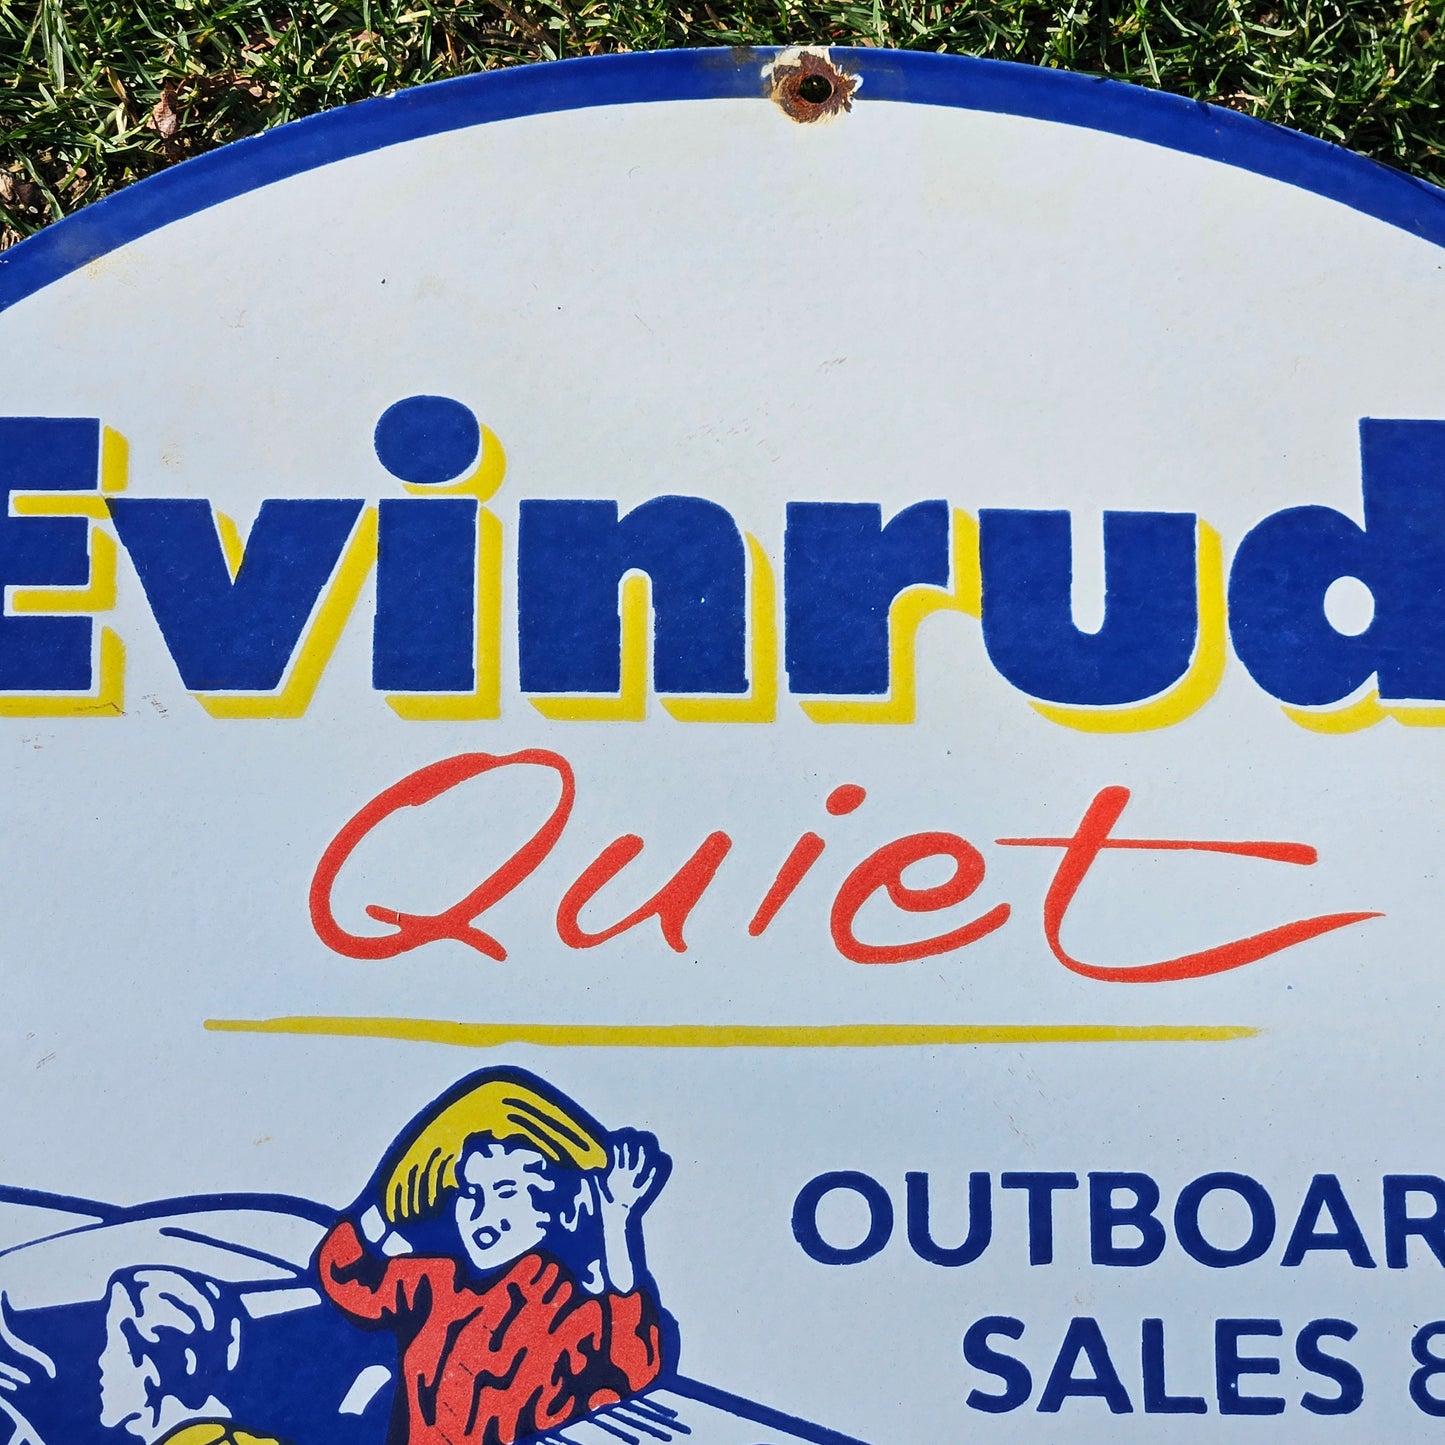 Evinrude Quiet Outboard Motor Sales & Service Porcelain on Metal